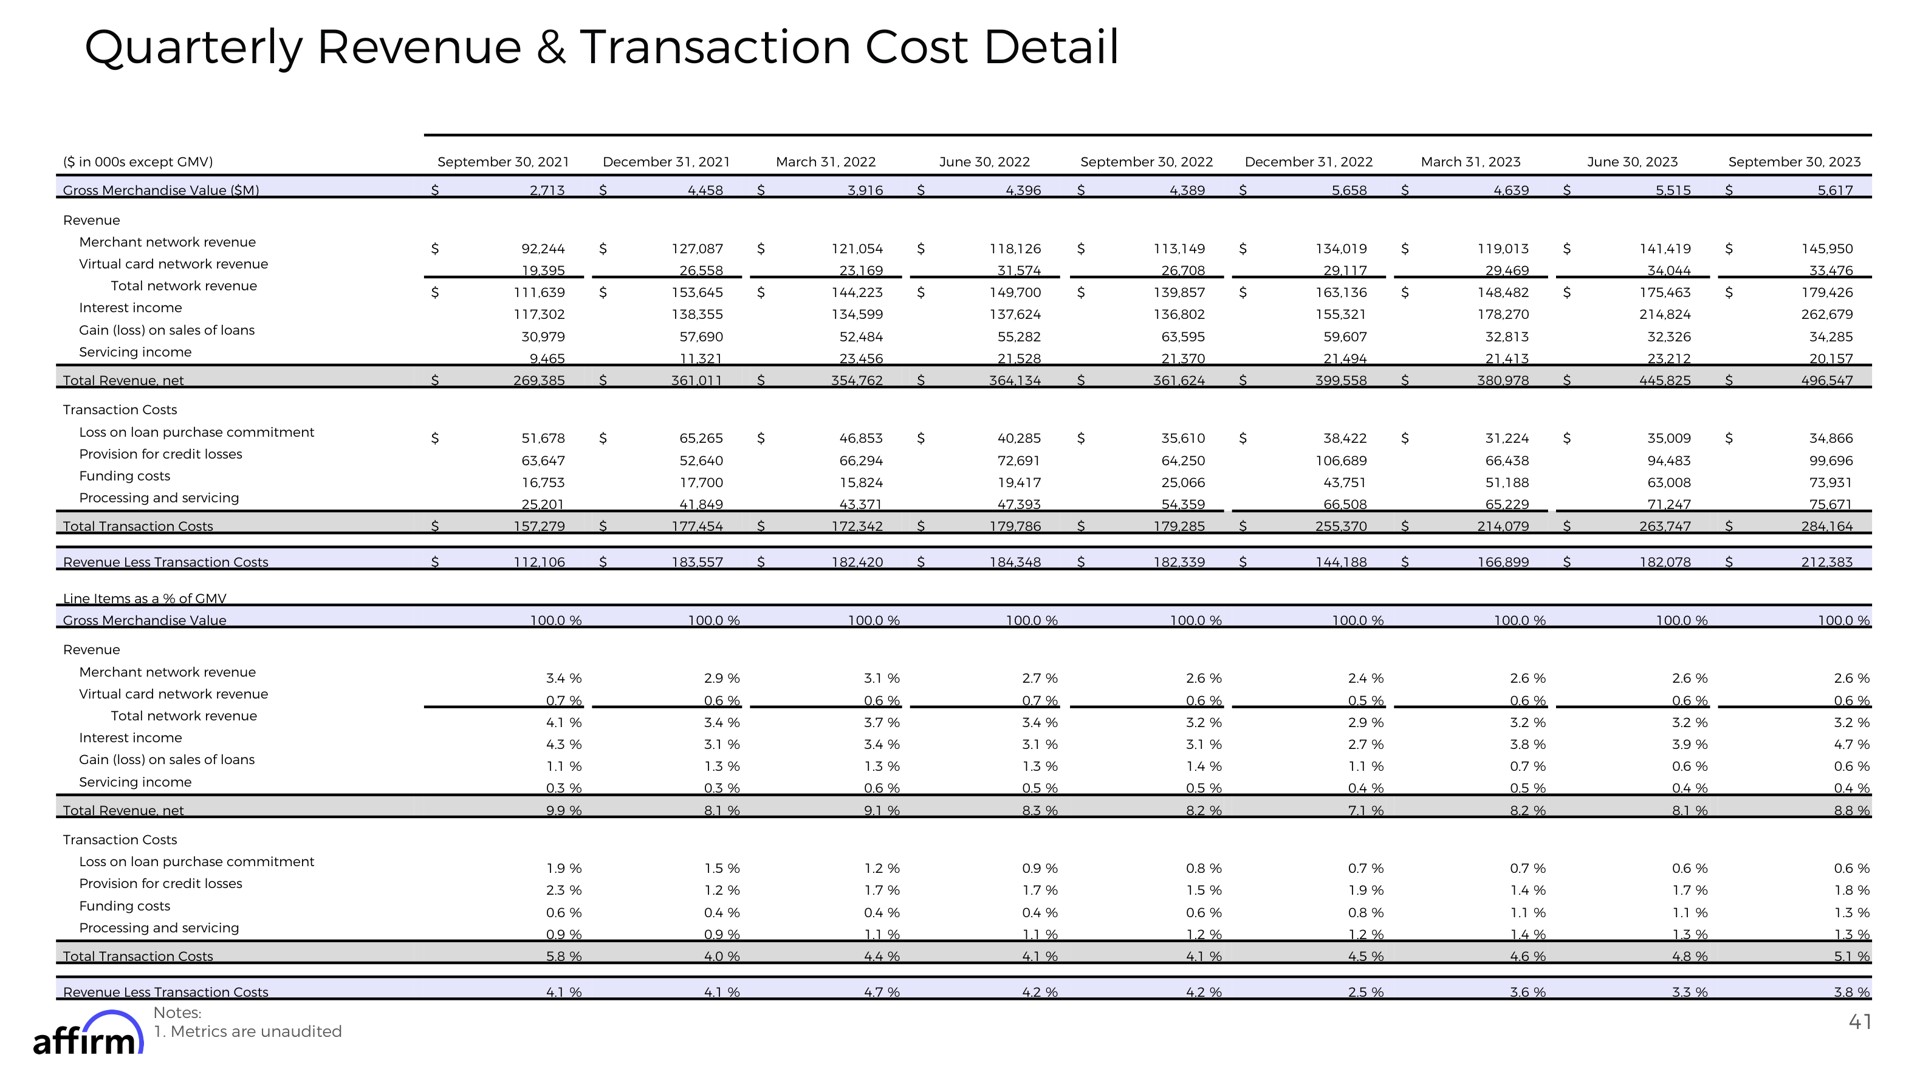 quarterly revenue transaction cost detail affirm | Affirm